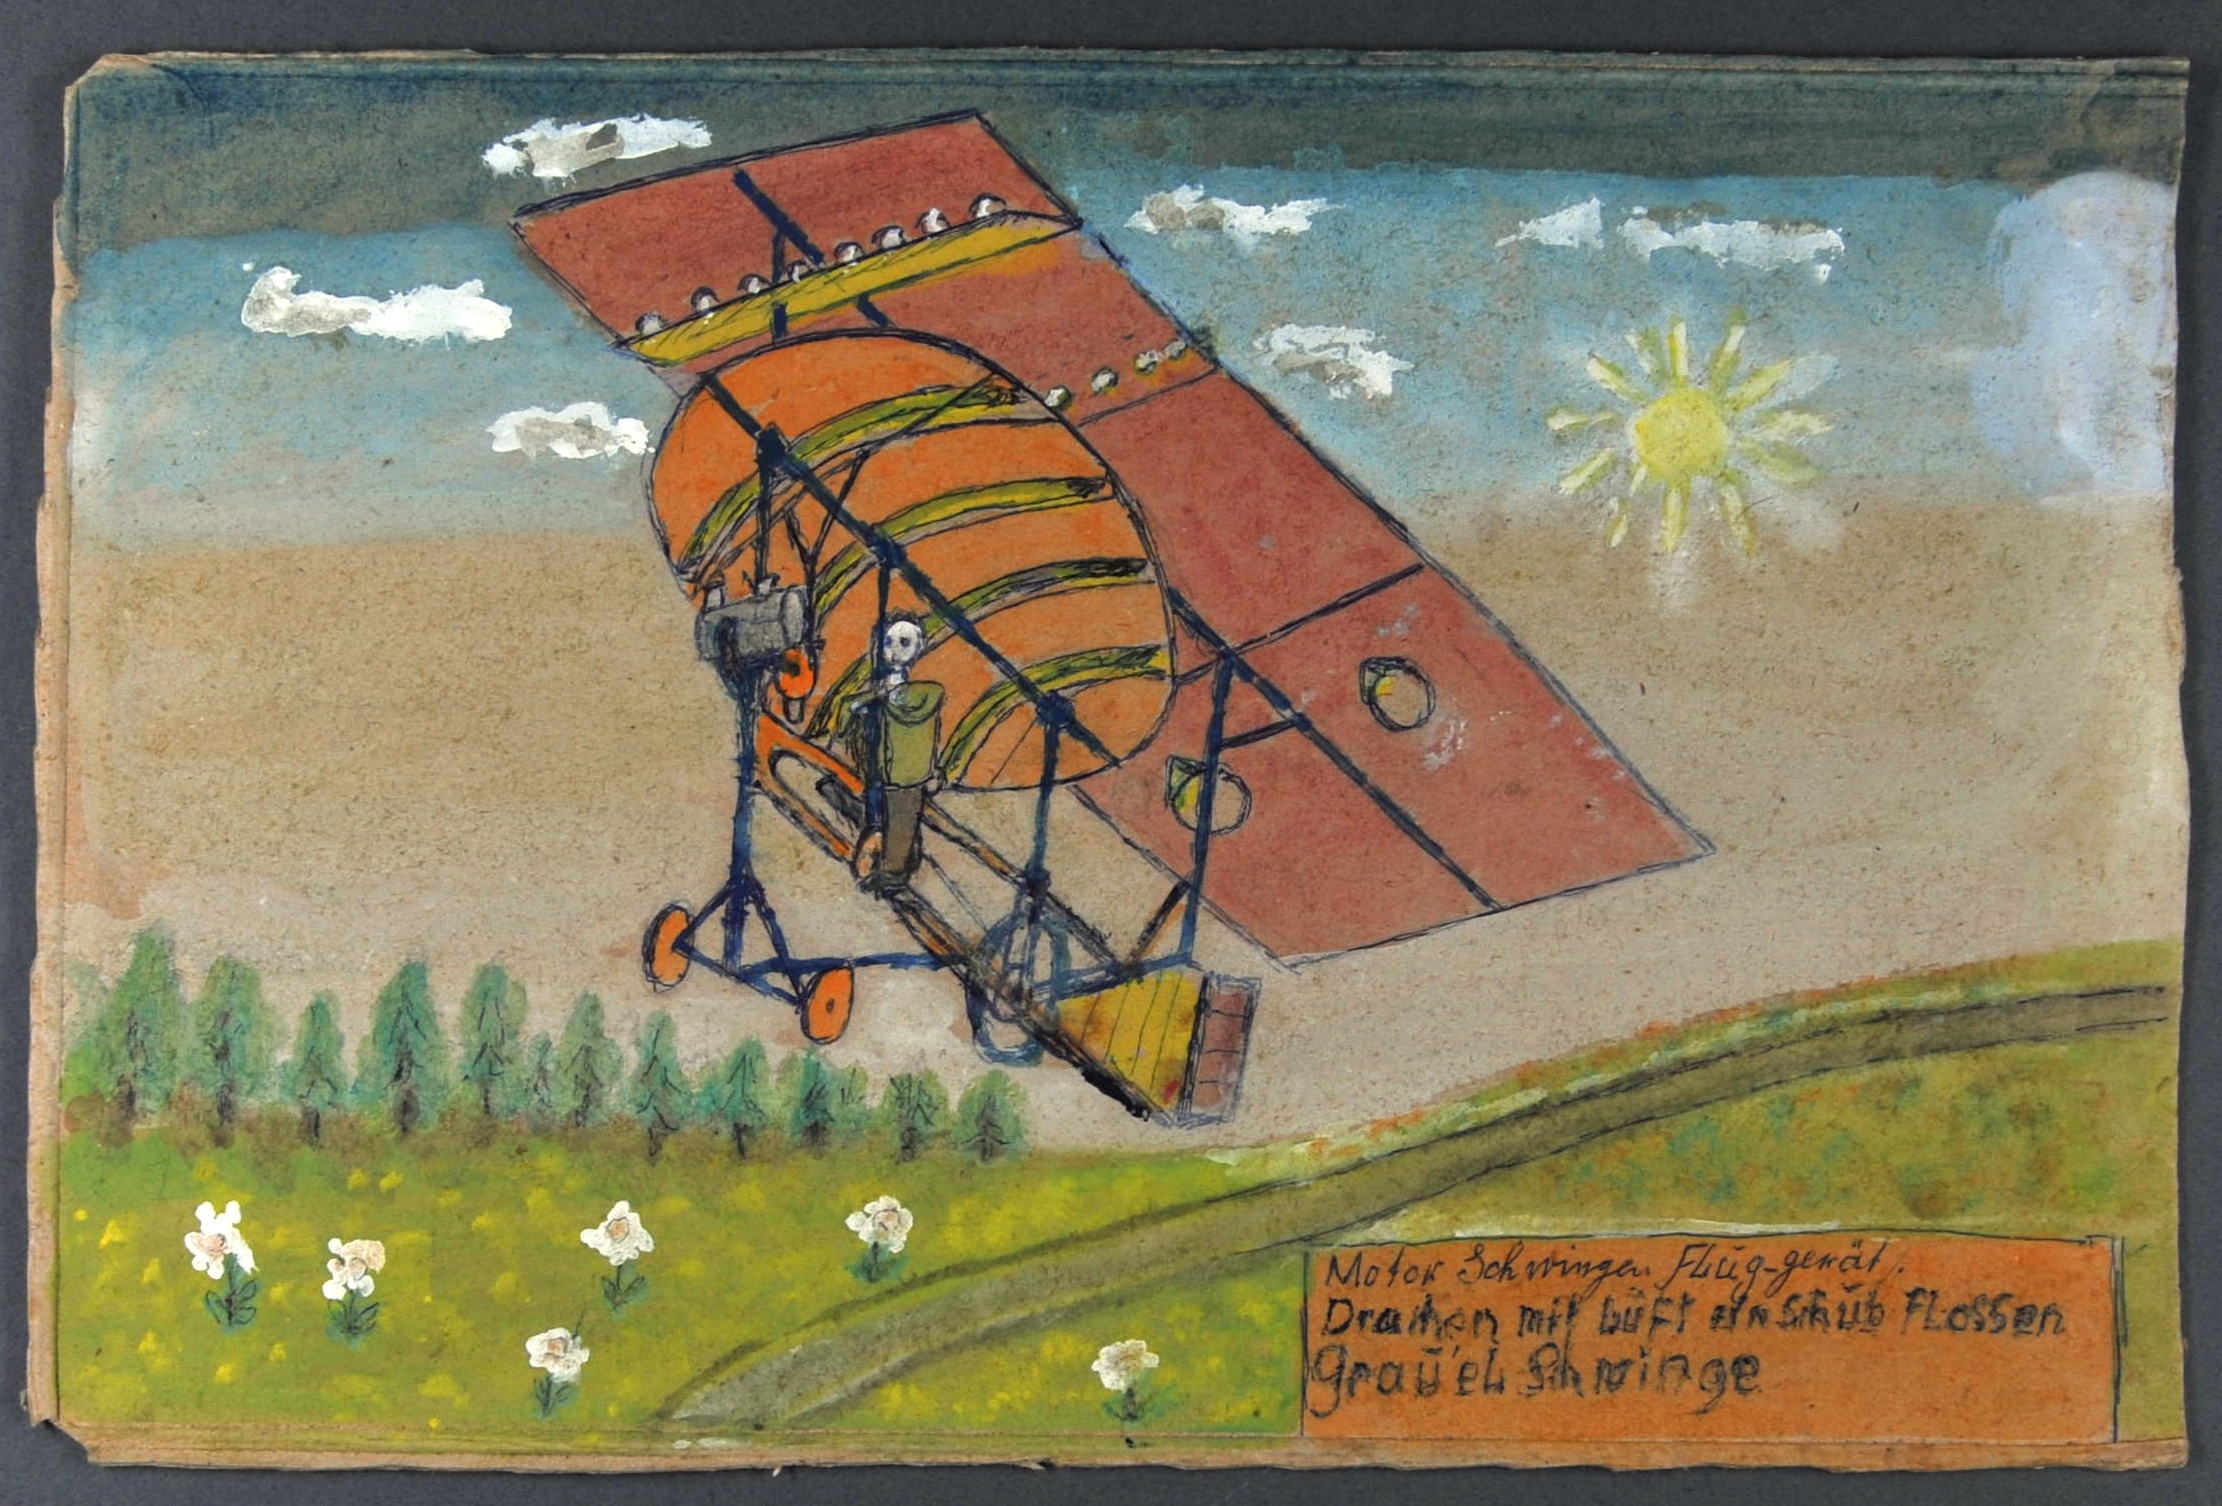 "Motor Schwingen Flug-gerät" (Gustav Mesmer Stiftung CC BY-NC-SA)